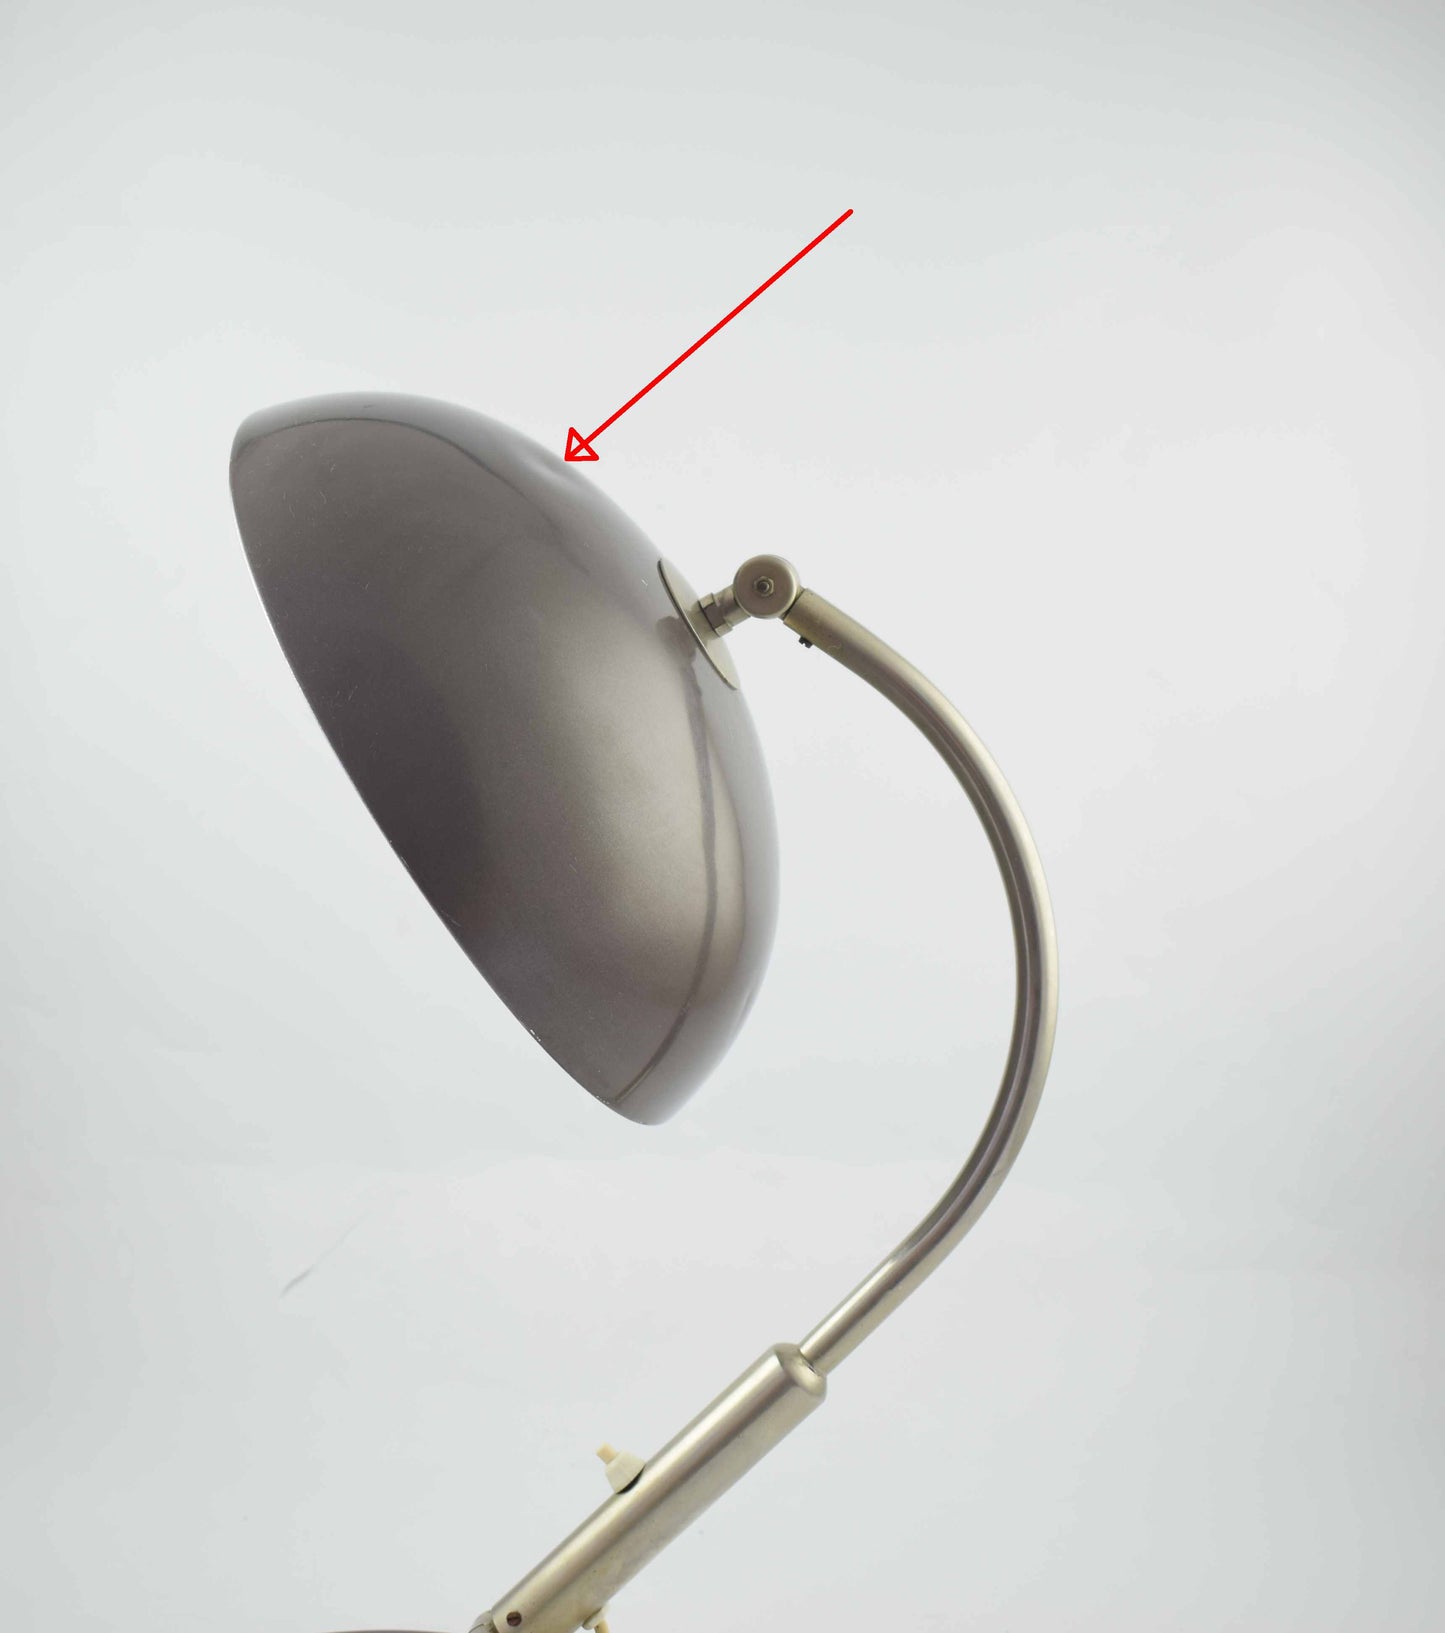 Hala Desk lamp Model 144 designed Busquet, famous dark grayish-brown and chrome design table light from The Netherlands